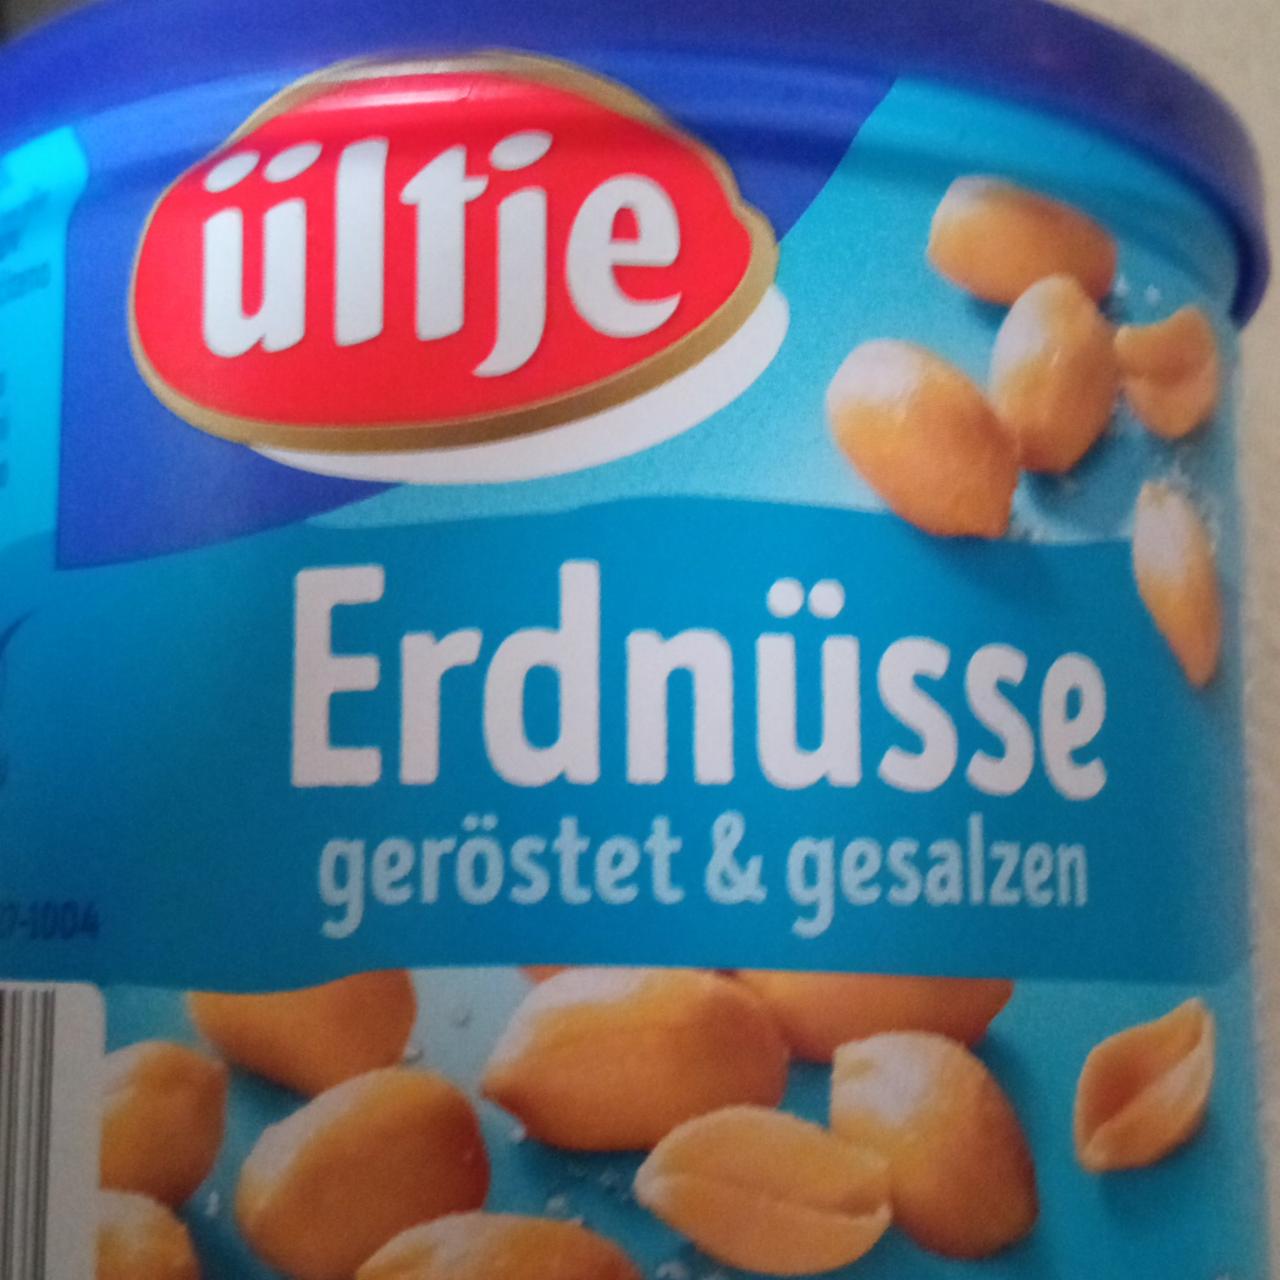 Zdjęcia - Erdnüsse geröstet & gesalzen Ültje